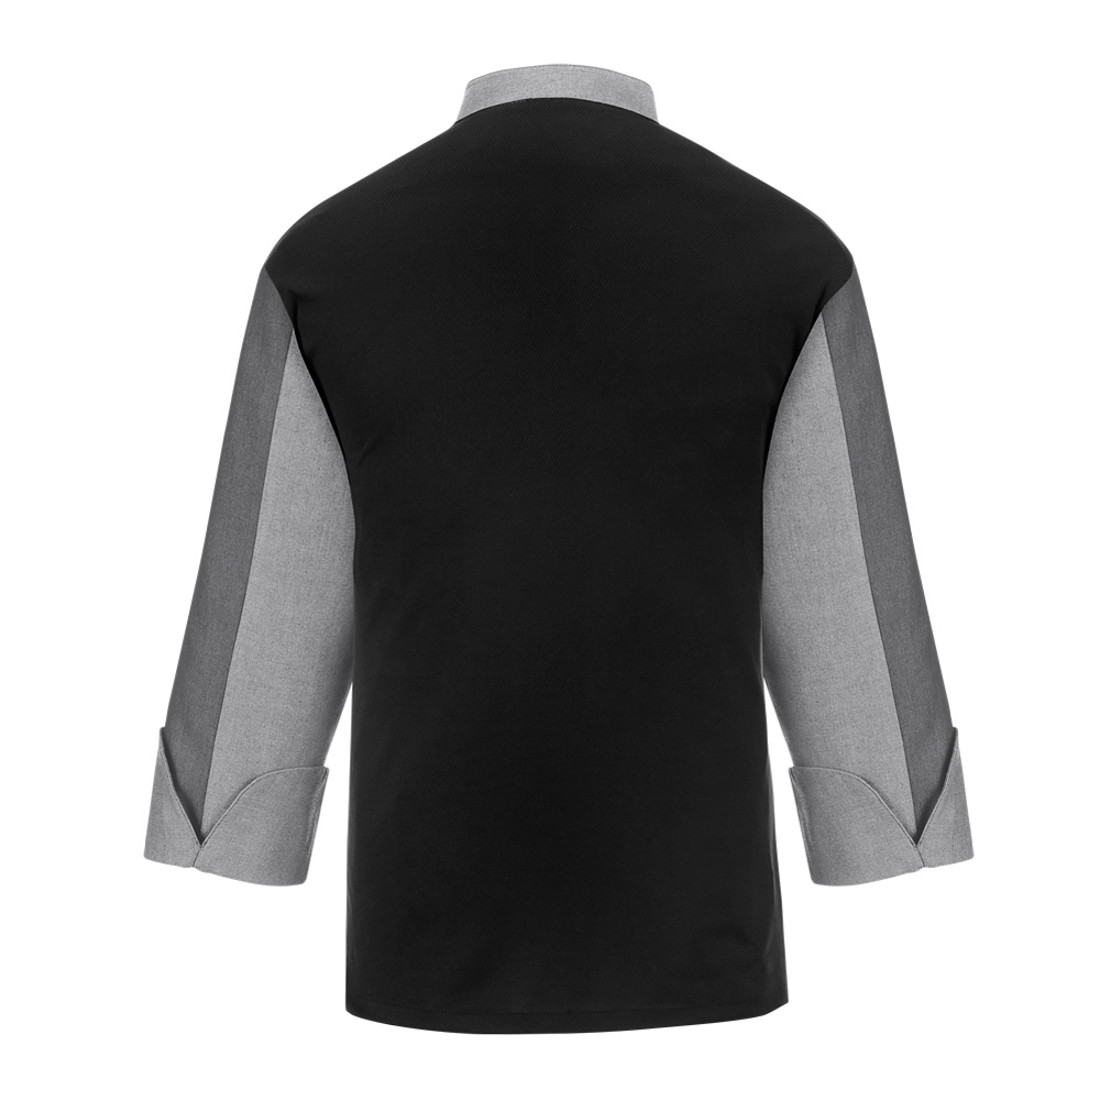 Jimmy Chef's Jacket, 65% polyester/35% cotton - Safetywear